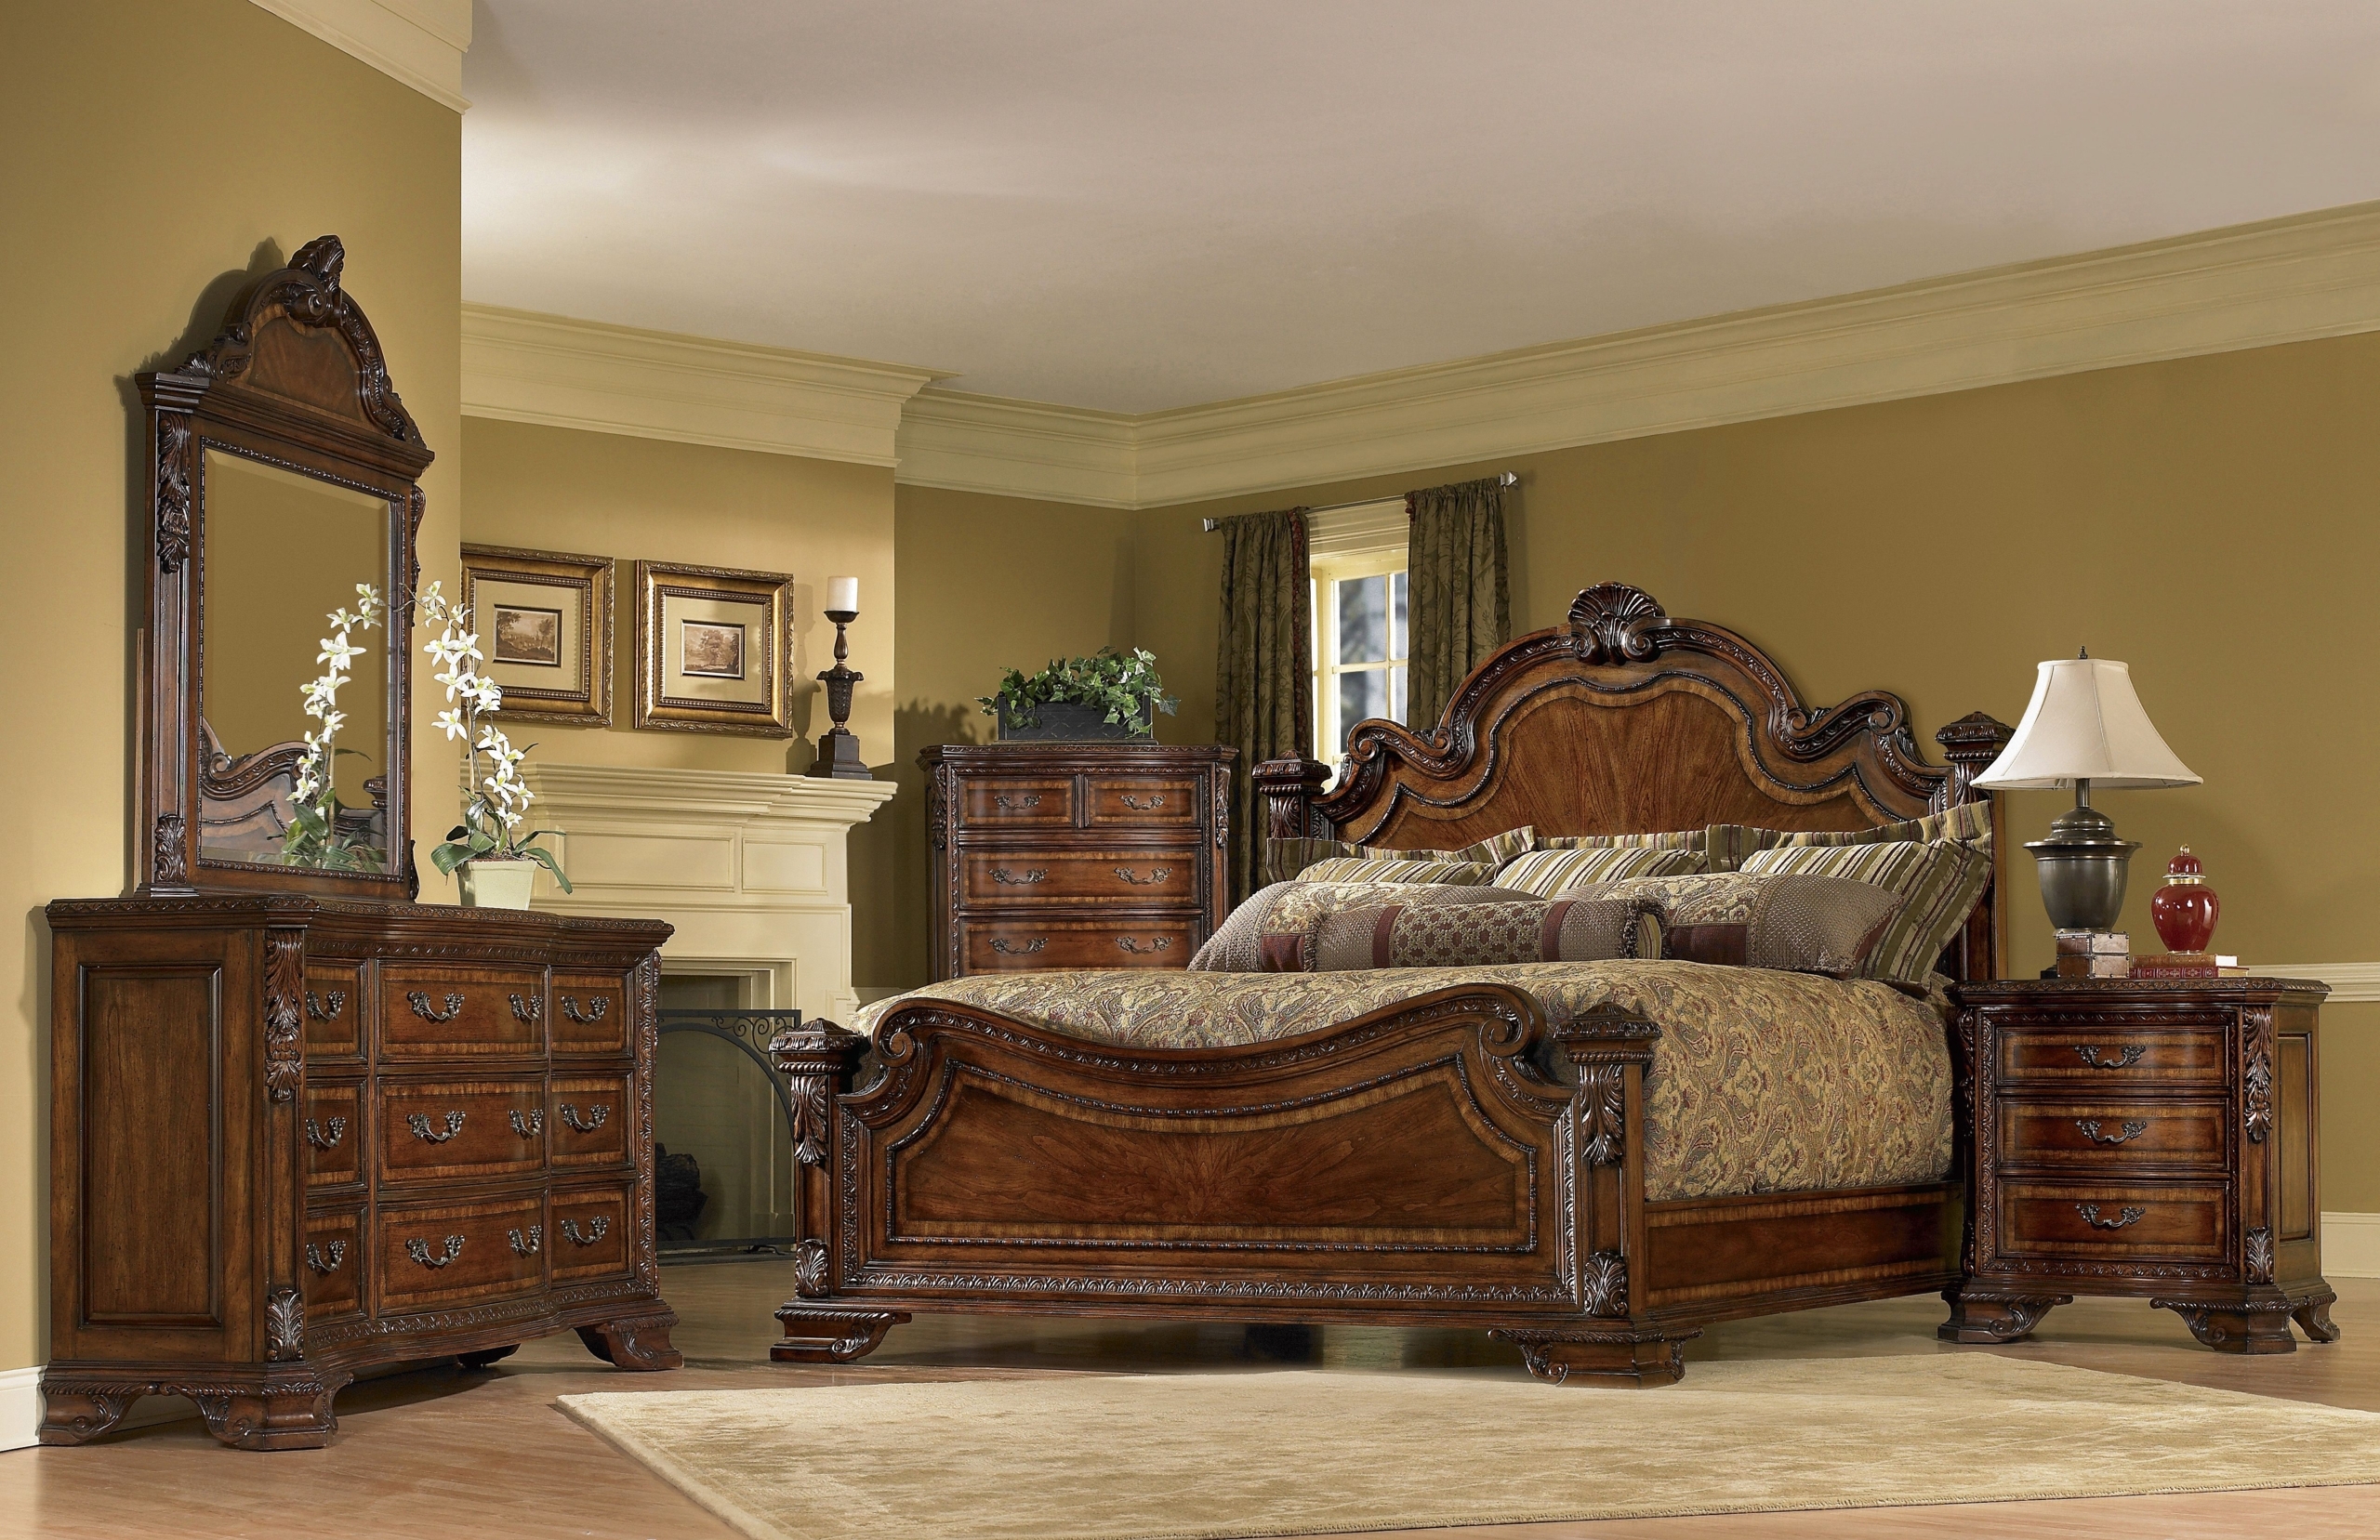 Old Fashioned Bedroom Furniture 